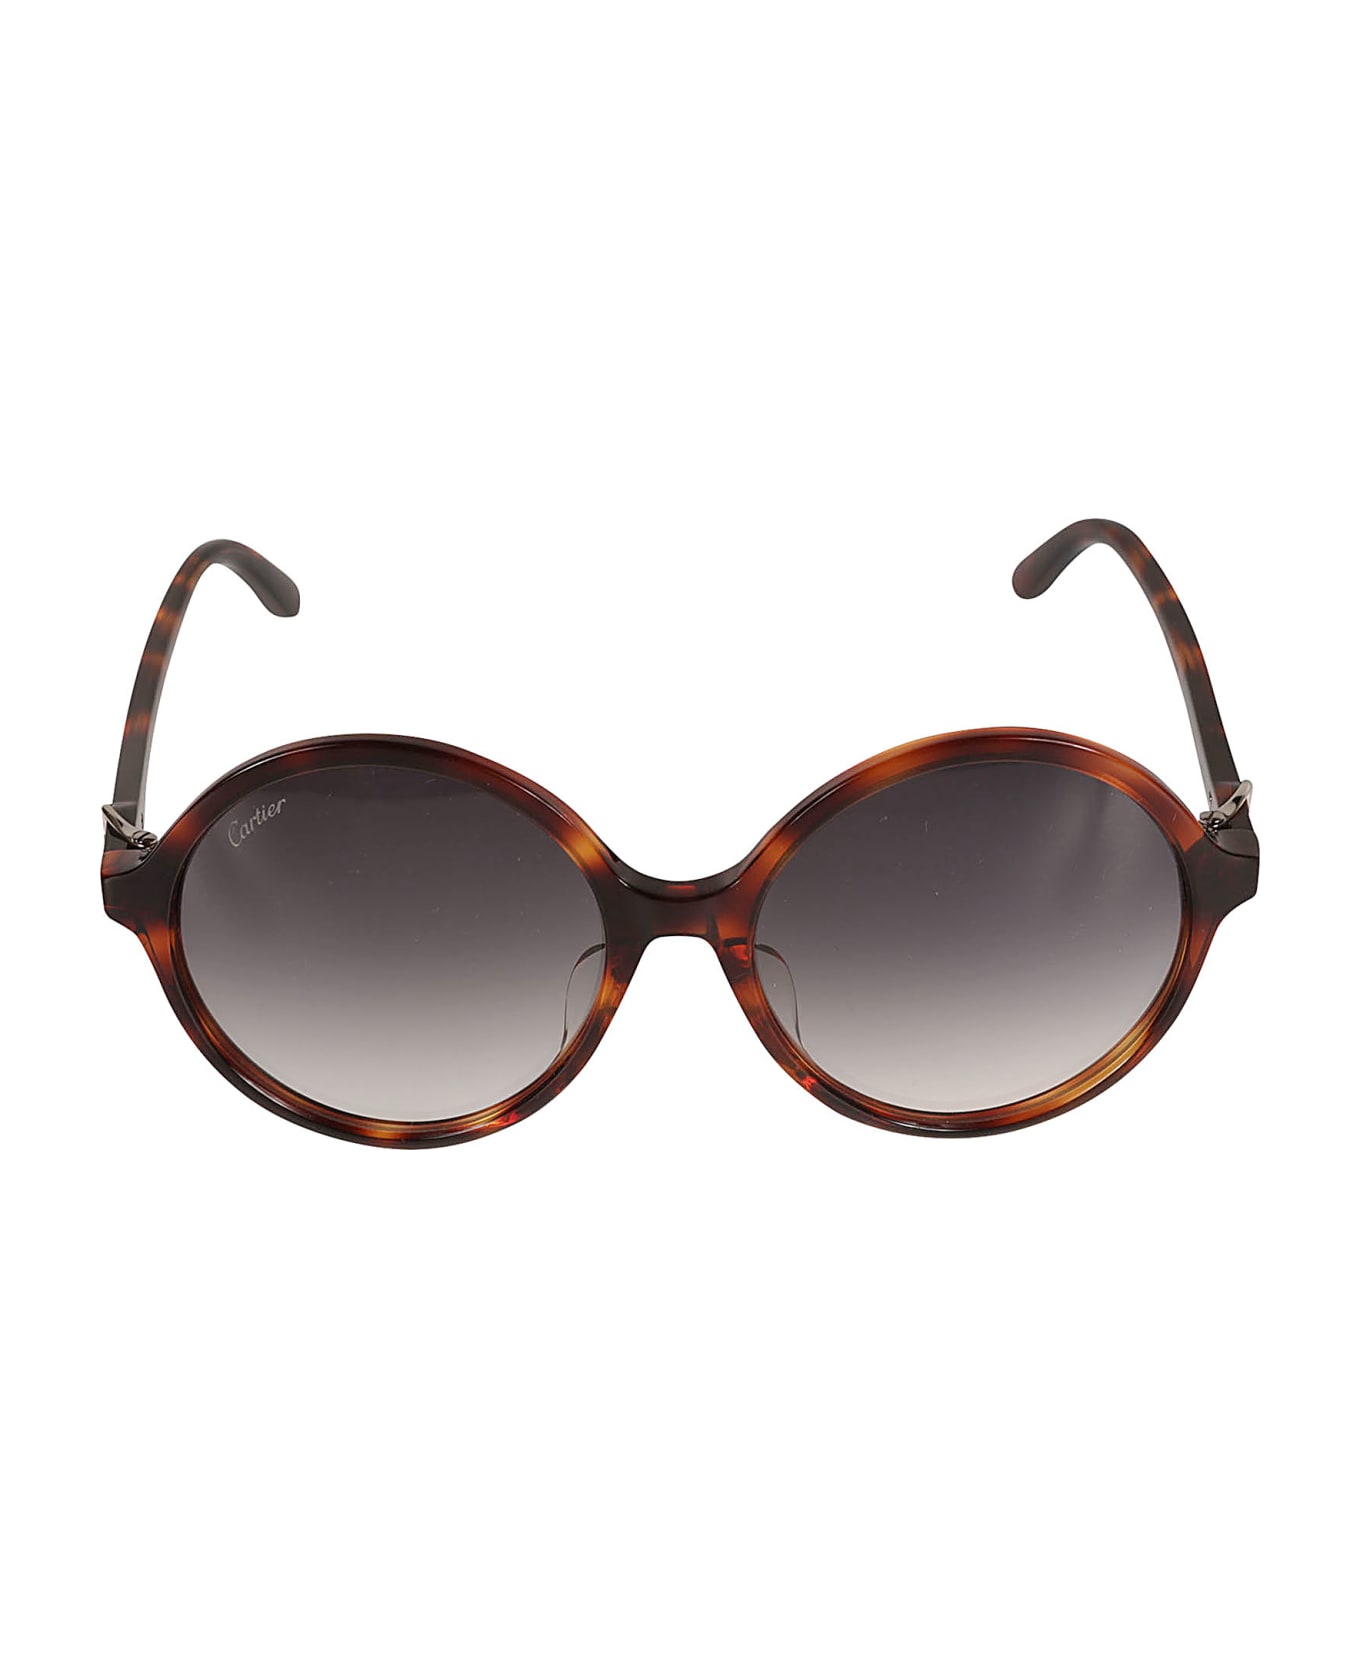 Cartier Eyewear Round Frame Logo Sunglasses - 003 havana havana grey サングラス